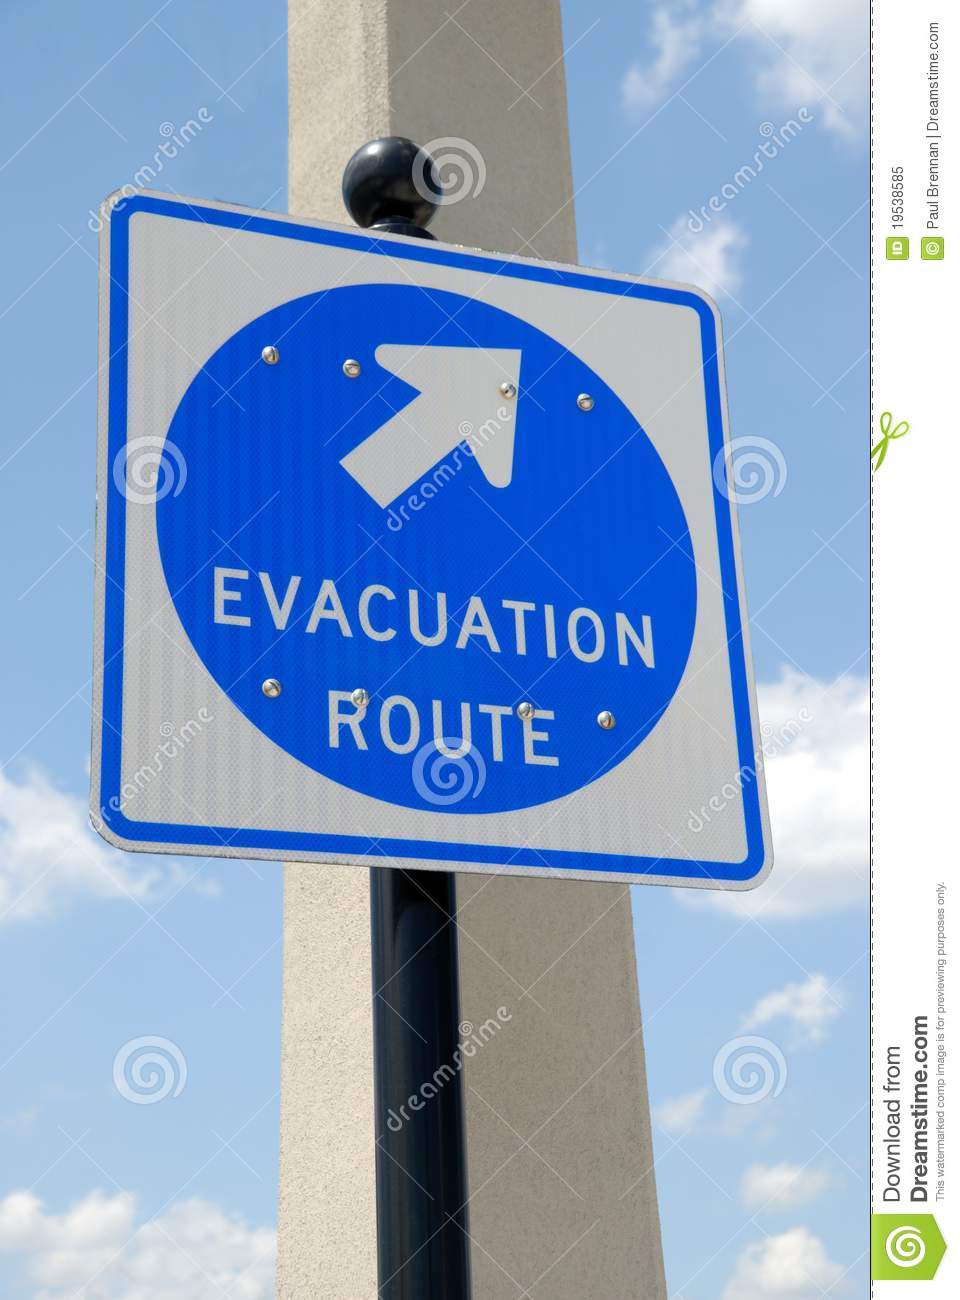 Evacuation Route Sign Royalty Free Stock Photo   Image  19538585